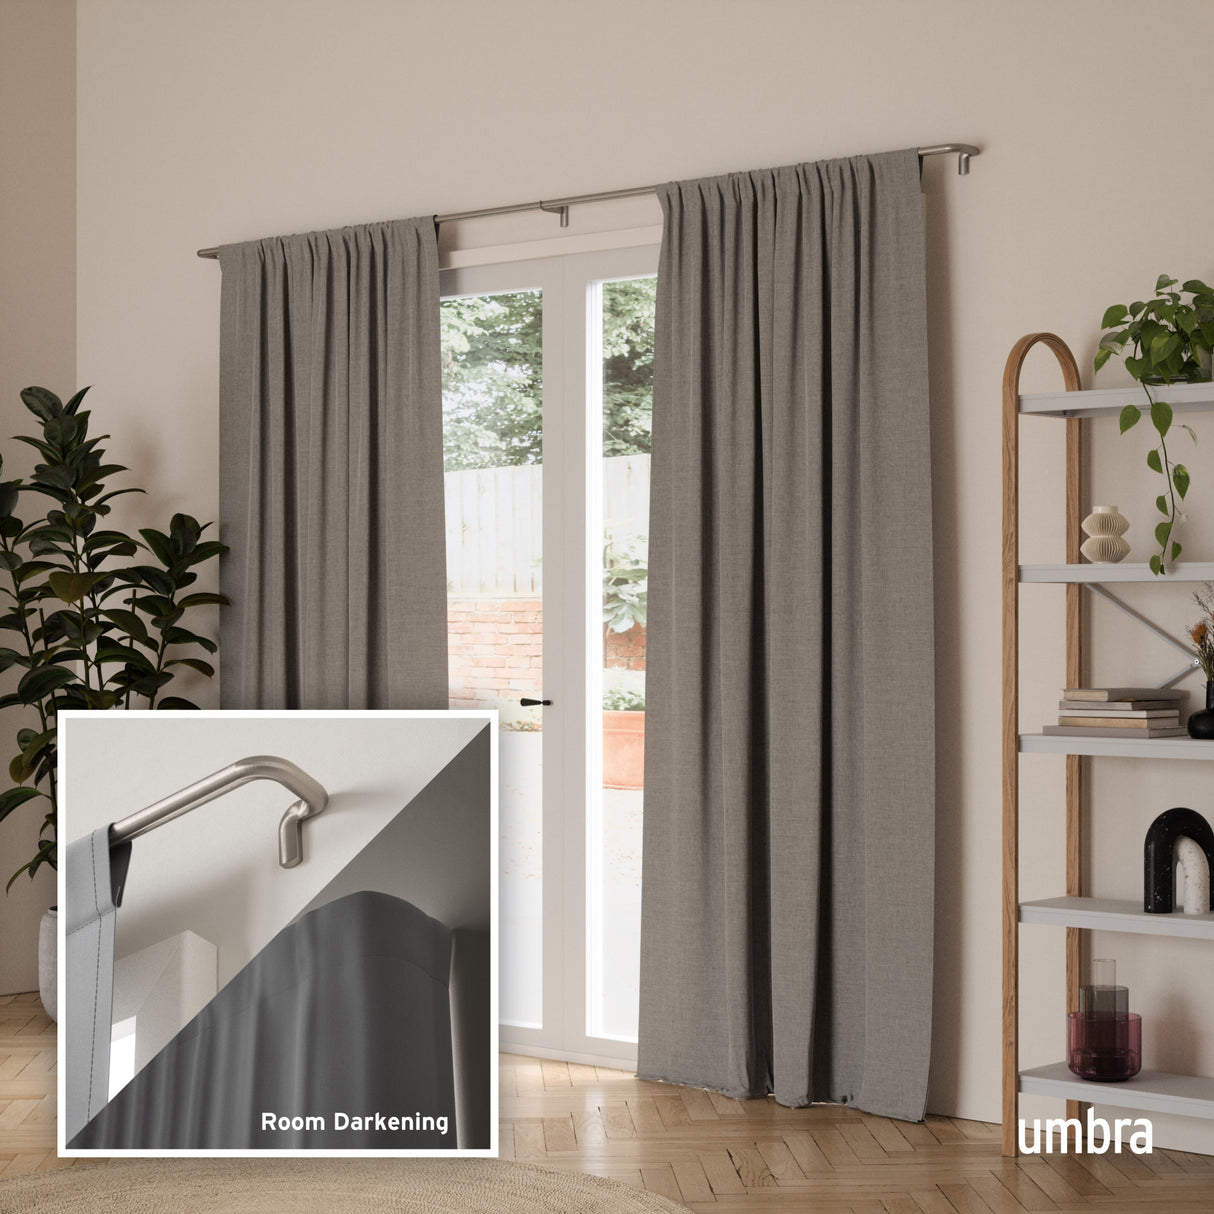 Single Curtain Rods | color: Matte-Nickel | size: 66-144" (168-365 cm) | diameter: 3/4" (1.9 cm)